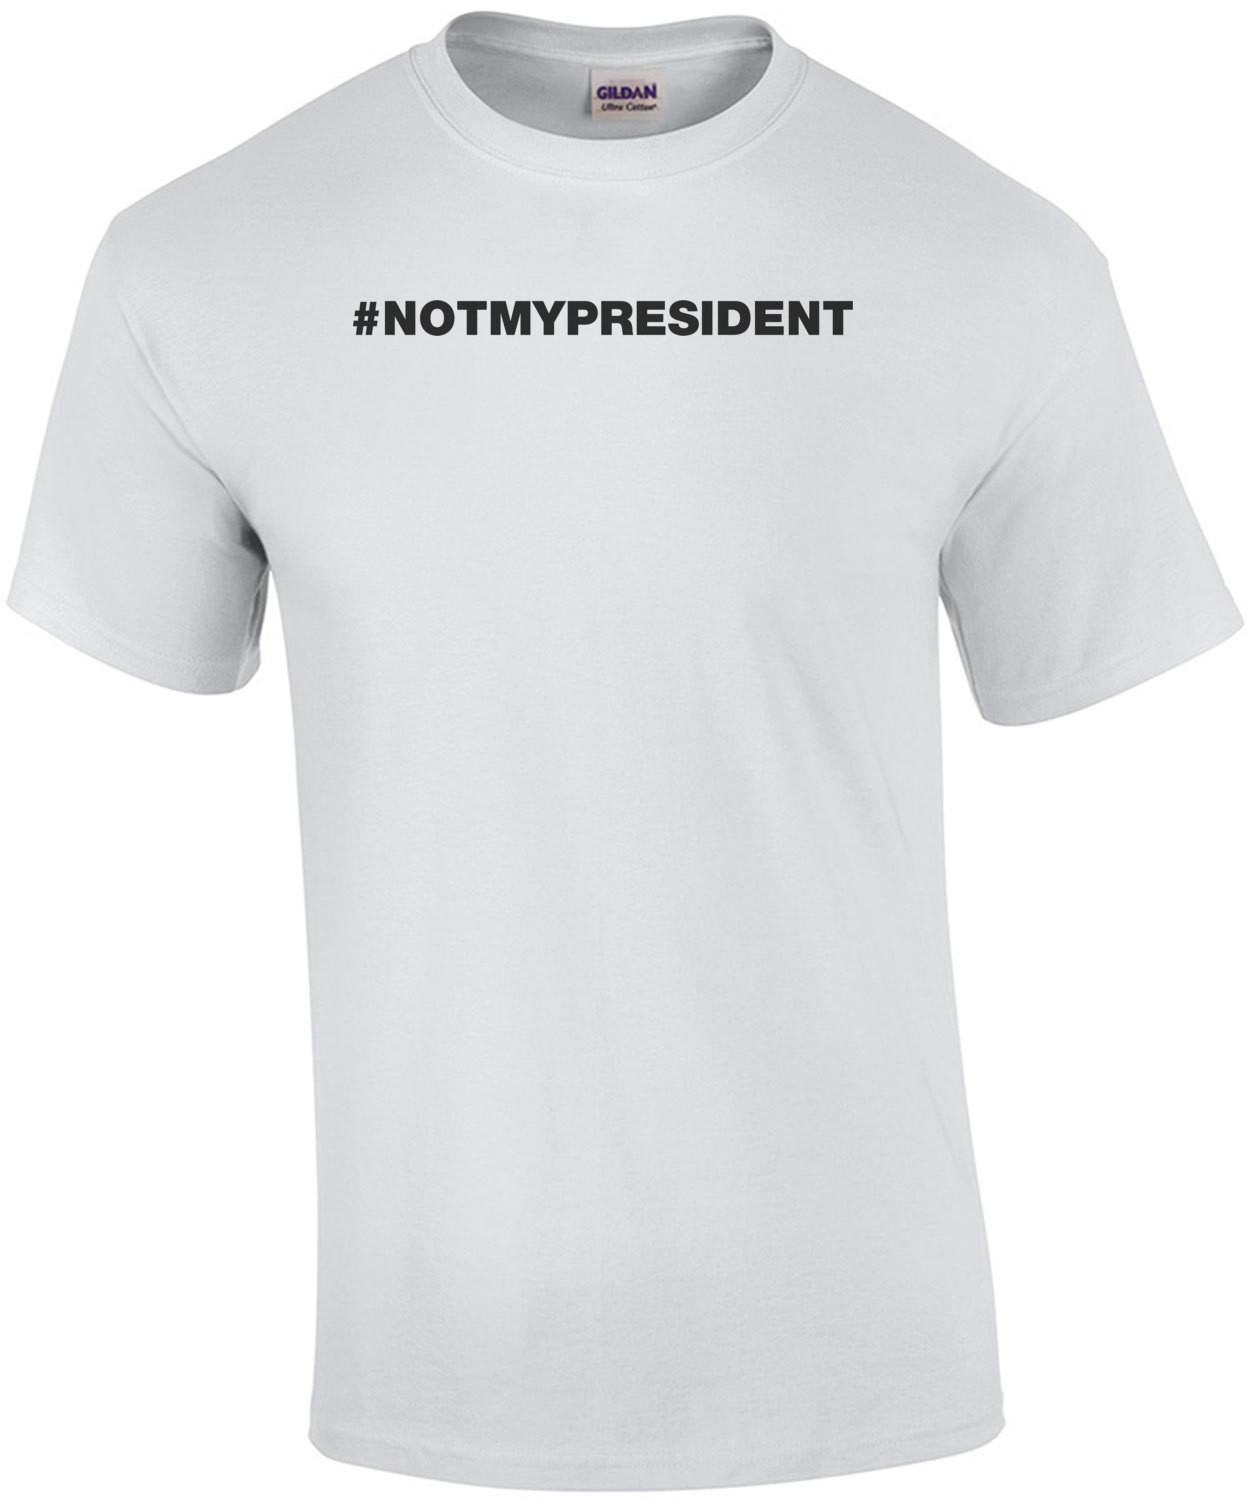 #notmypresident - Hash Tag Not My President Anti Trump Shirt